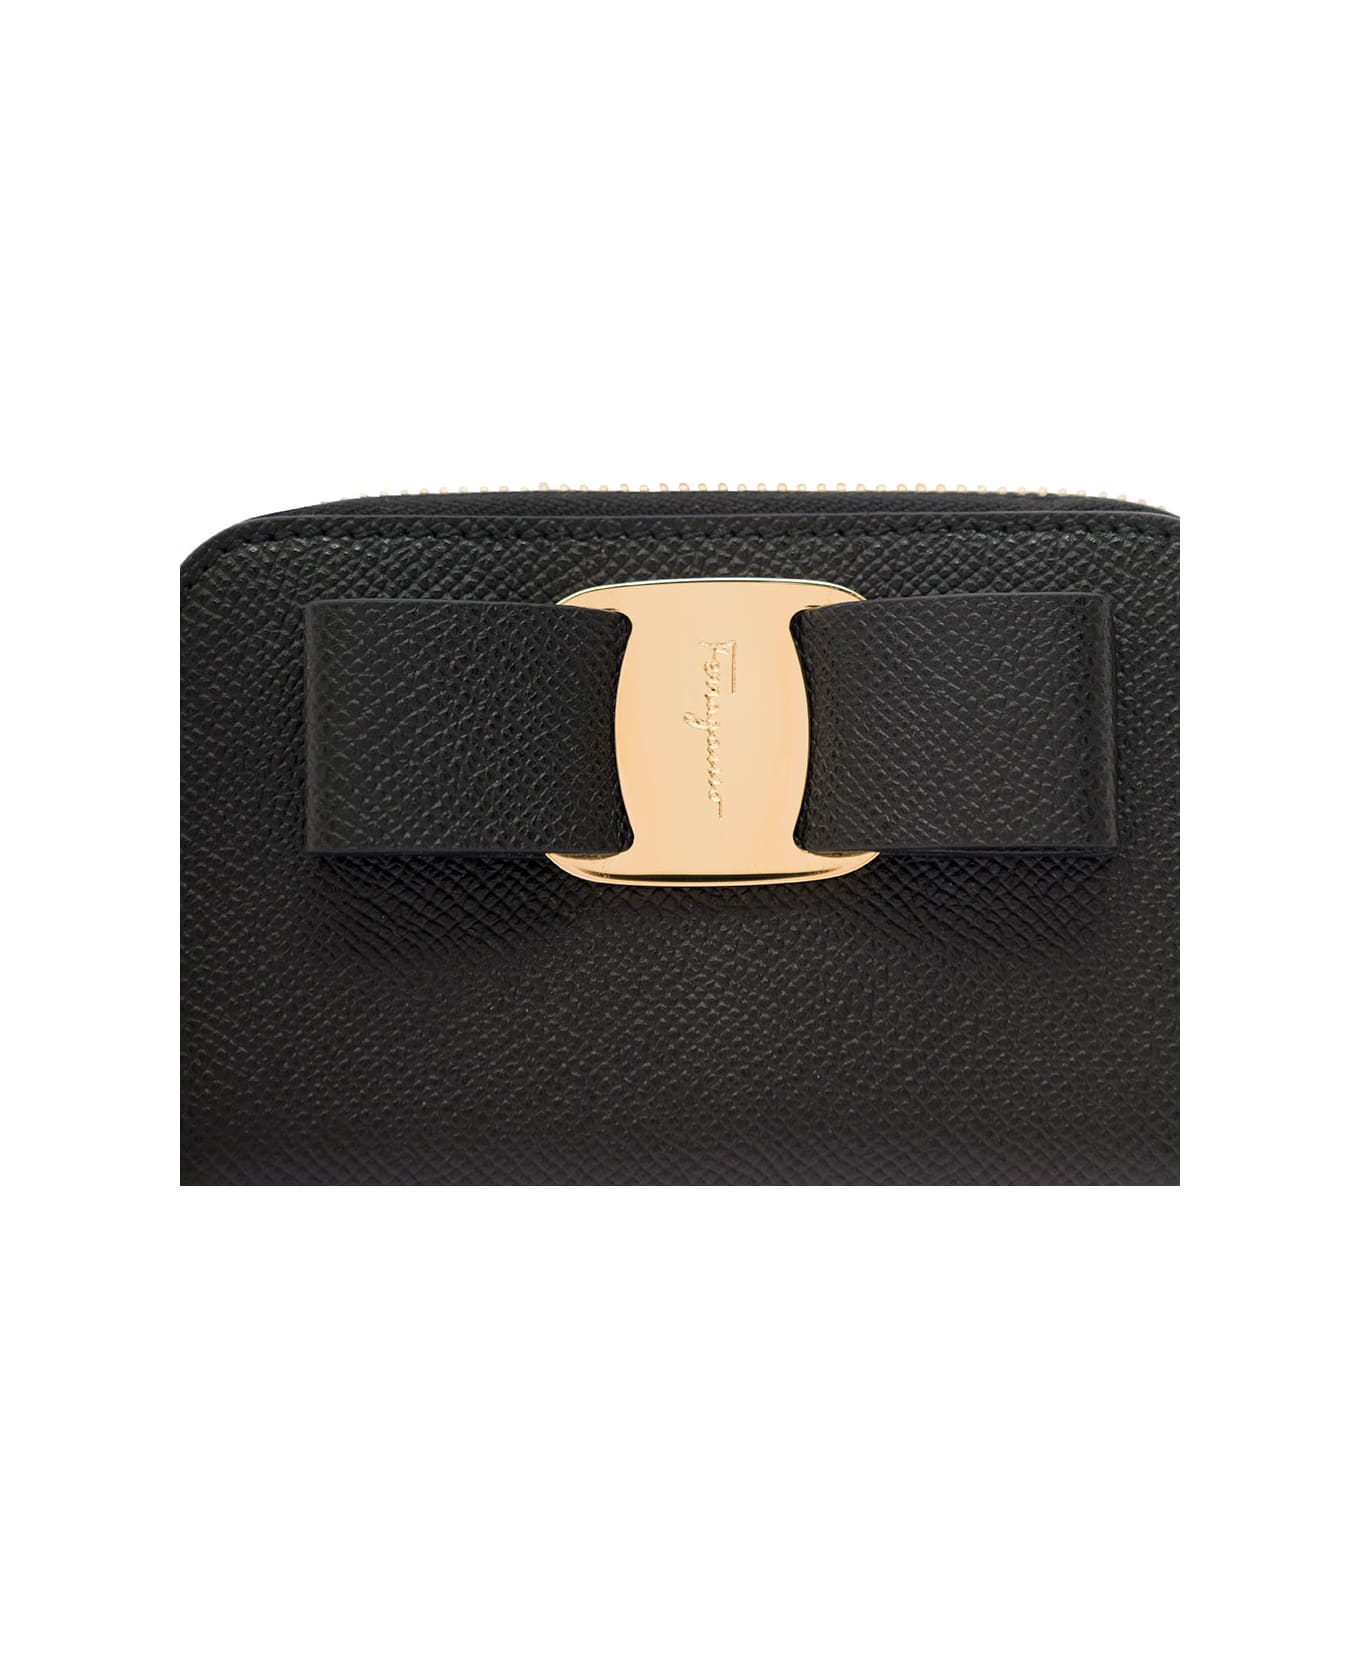 Ferragamo Black Leather Wallet - NERO